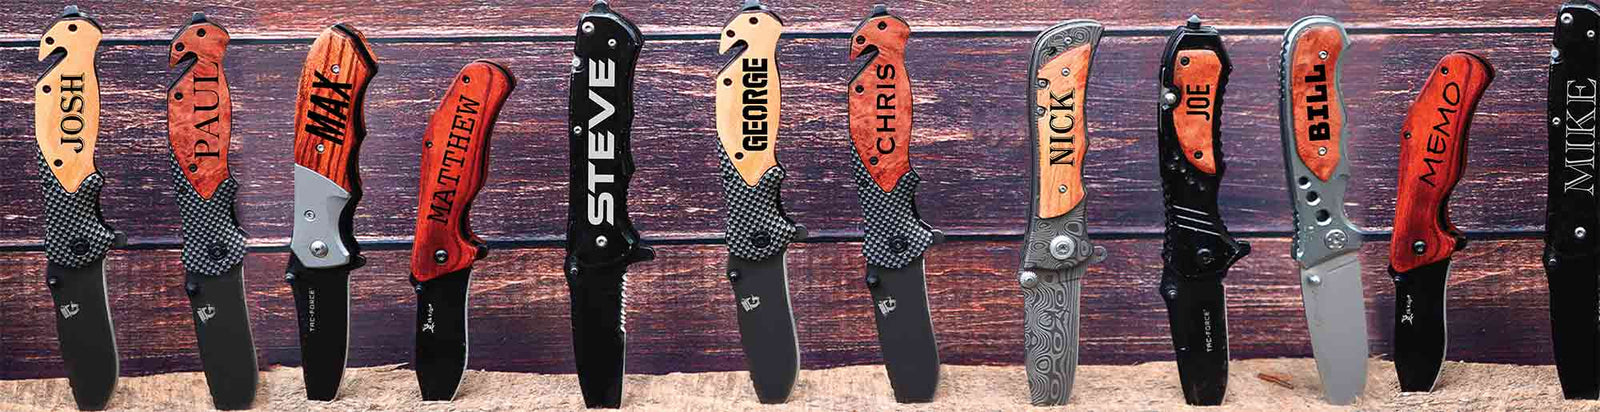 Custom Brass EDC Fixed Utility Blade SS Knife Sheath Belt Clip USA